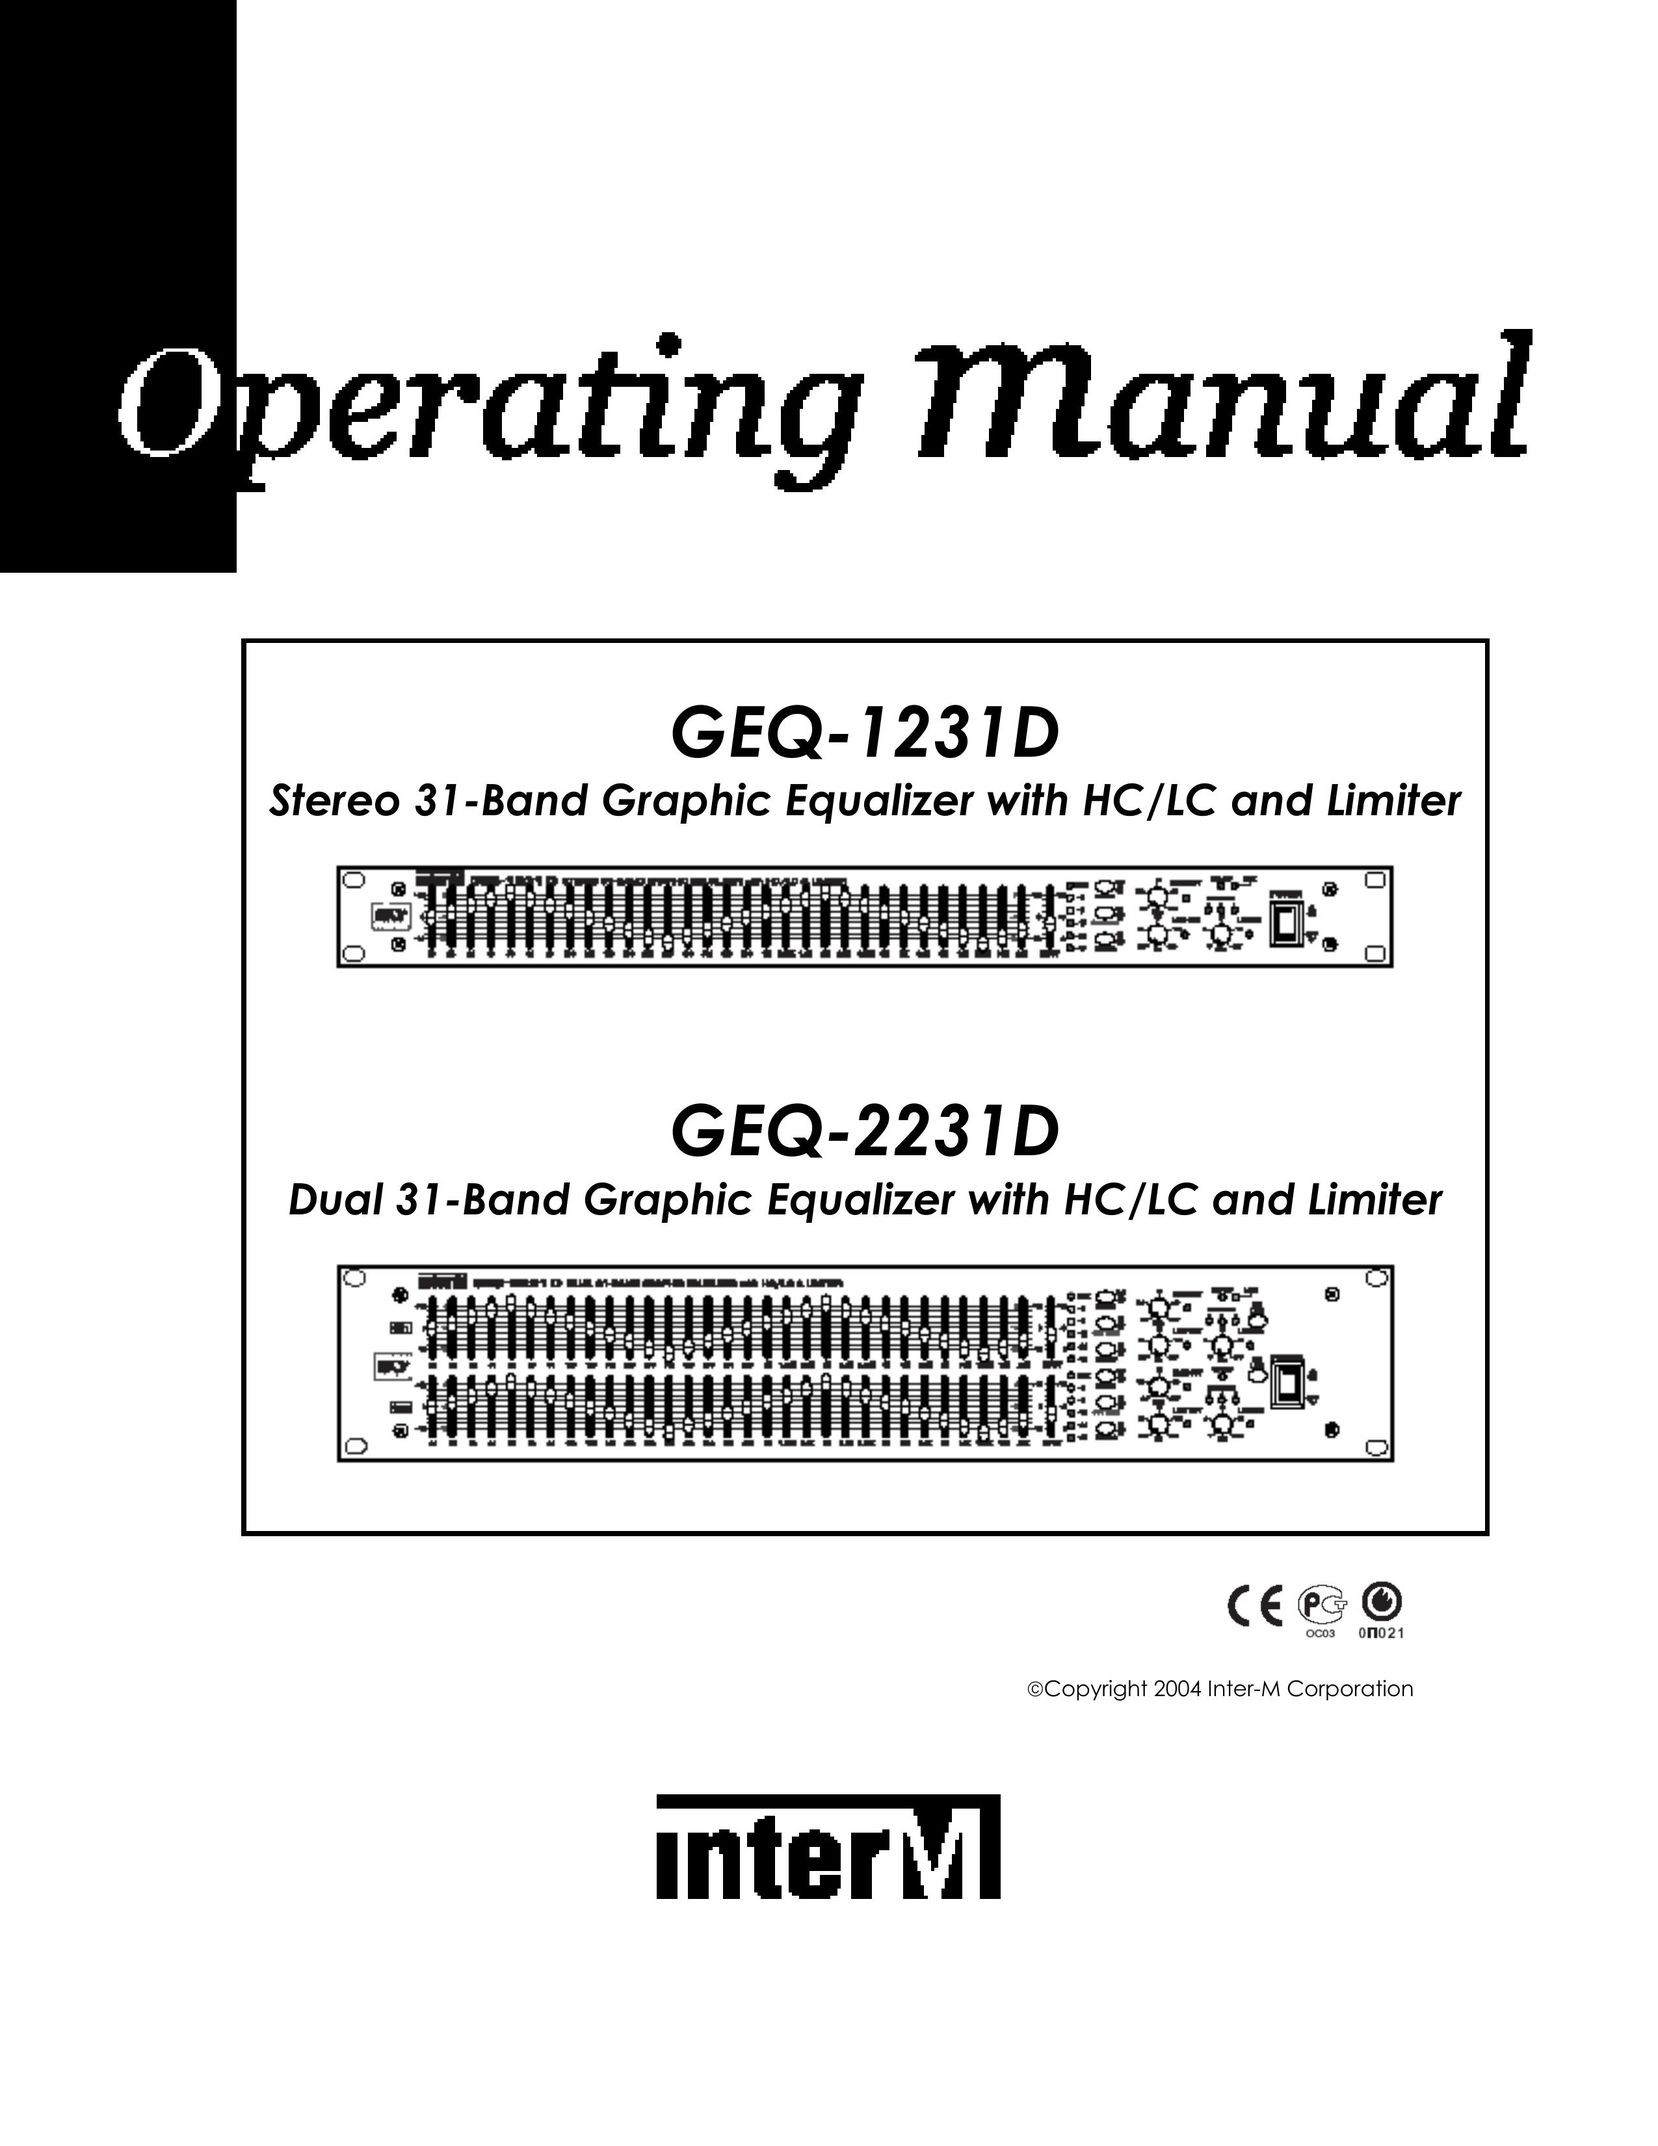 Intermec GEQ-1231D Stereo Equalizer User Manual